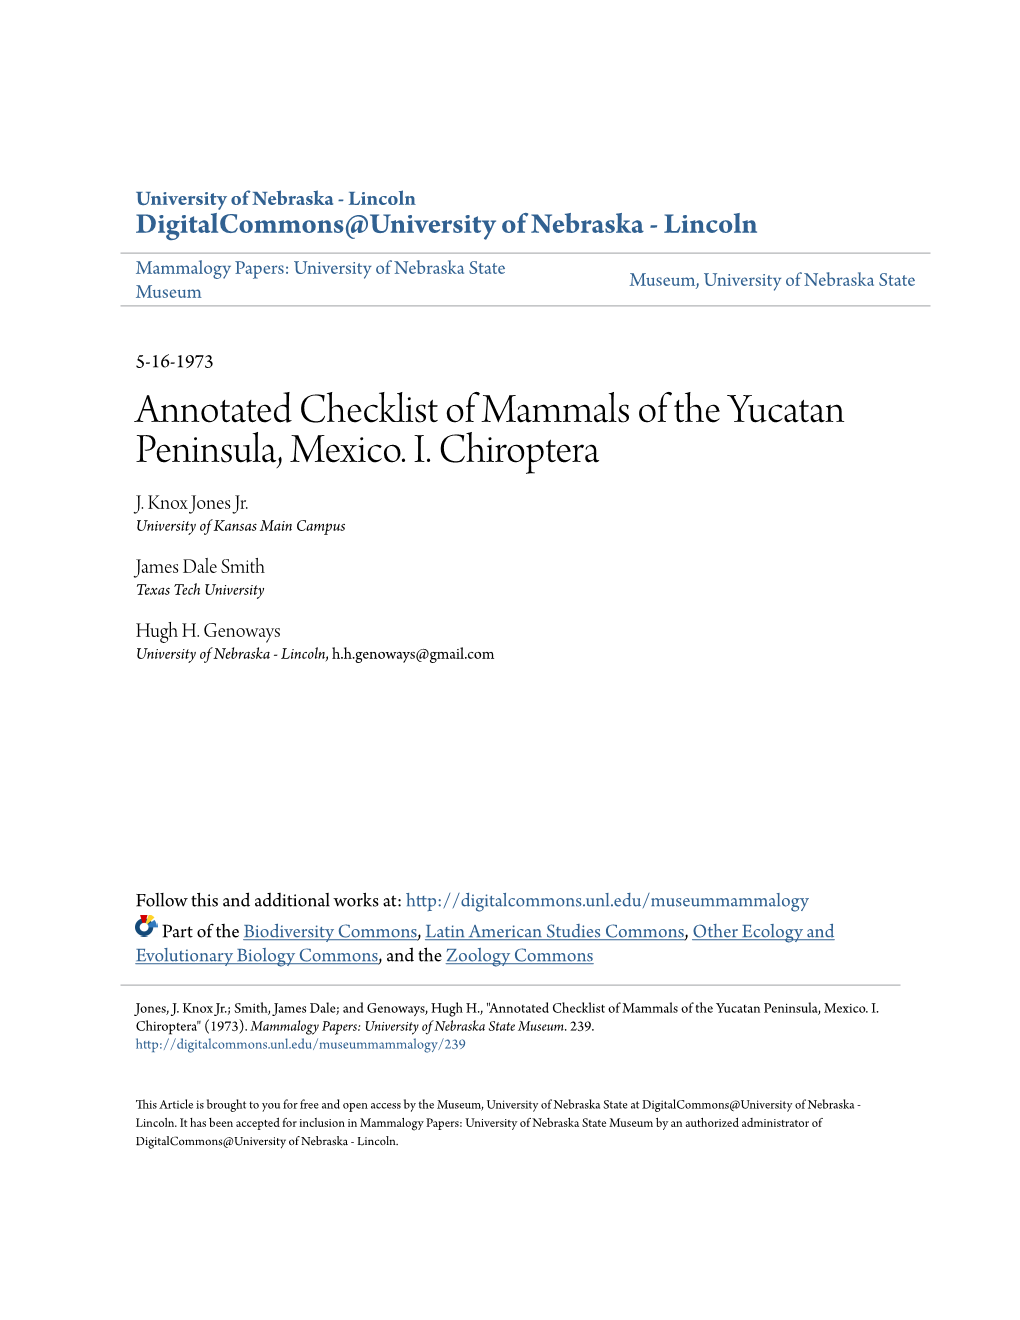 Annotated Checklist of Mammals of the Yucatan Peninsula, Mexico. I